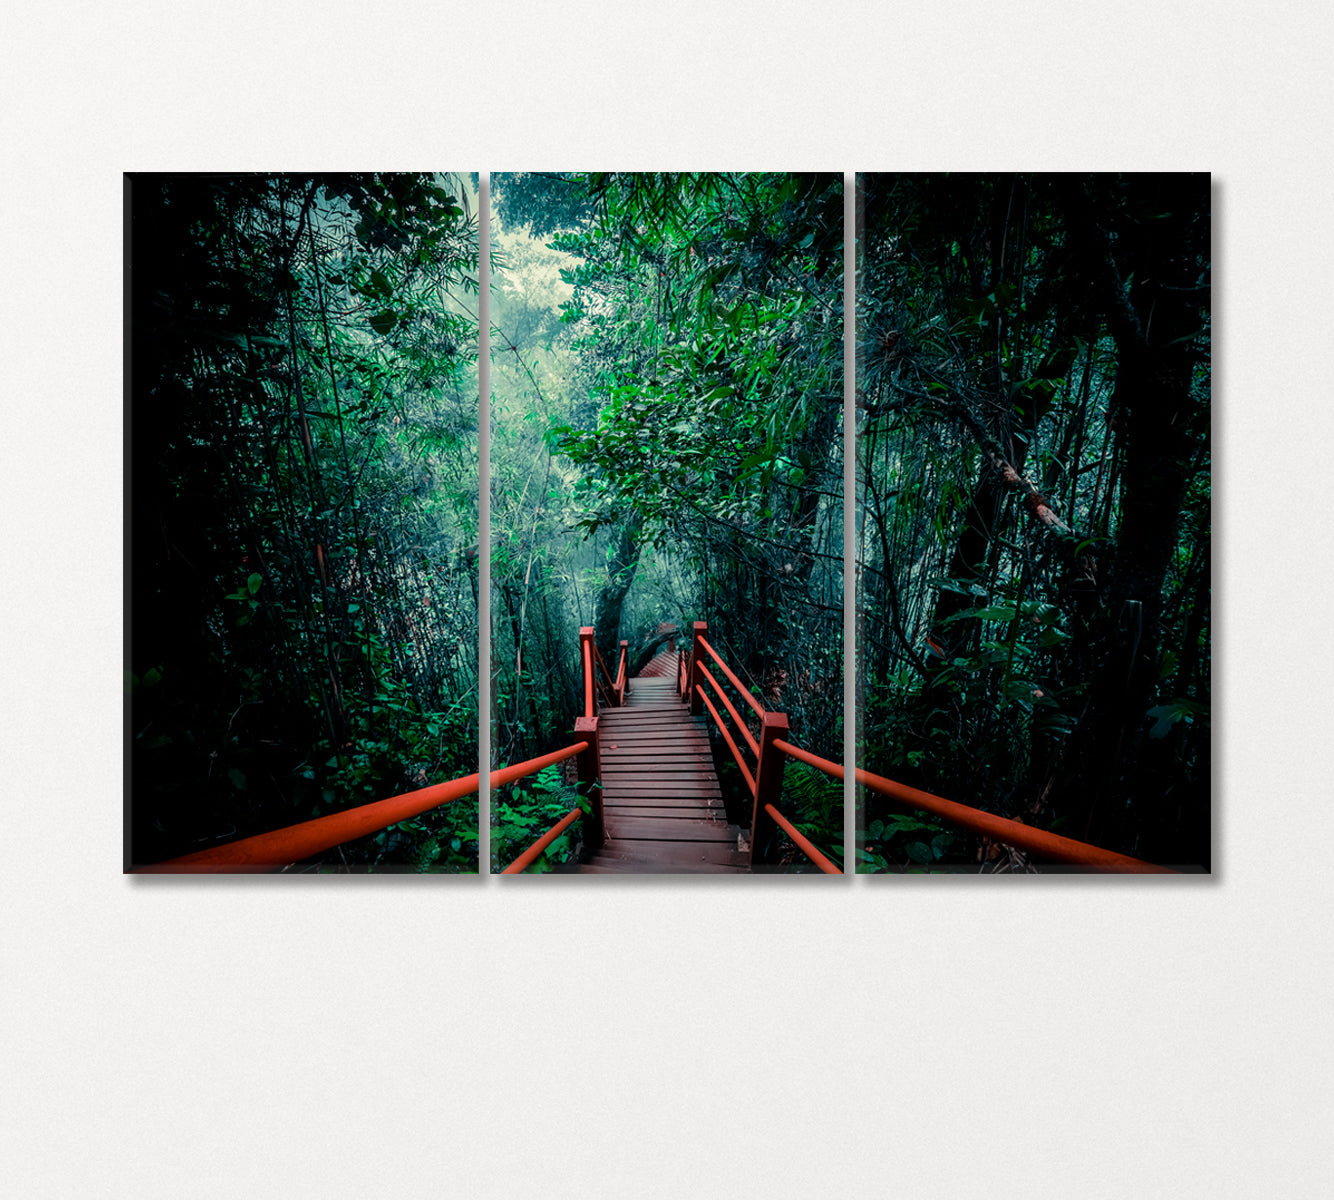 Wooden Bridge in Mystical Foggy Forest Canvas Print-Canvas Print-CetArt-3 Panels-36x24 inches-CetArt